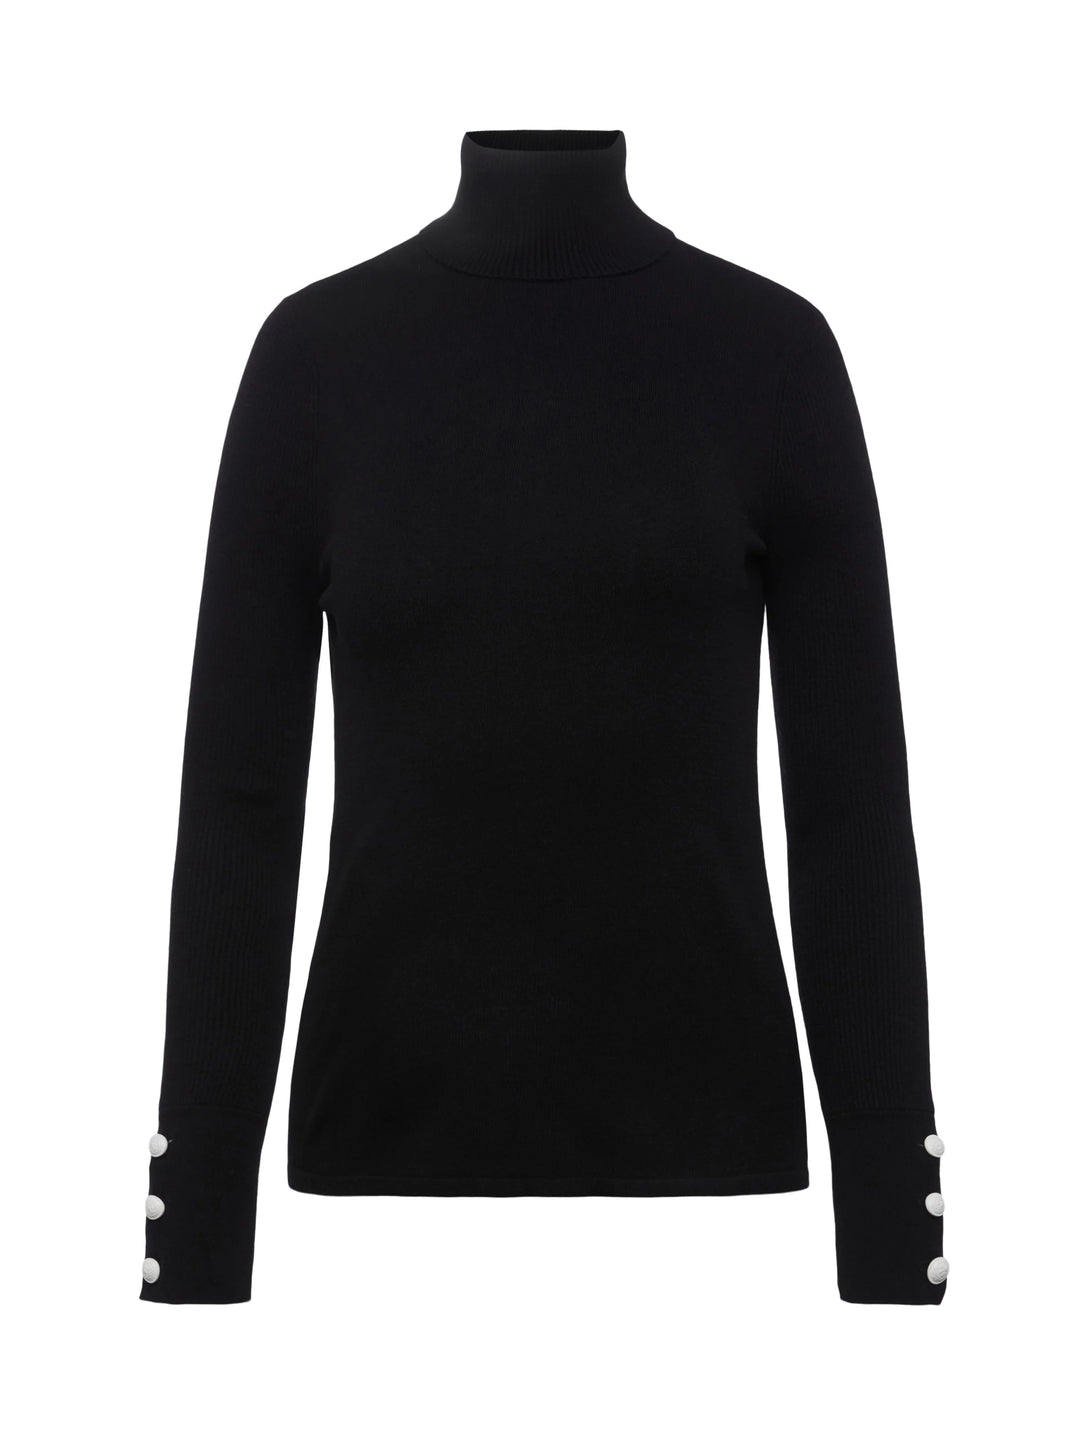 Odette Sweater Black/Ivory - blueandcream